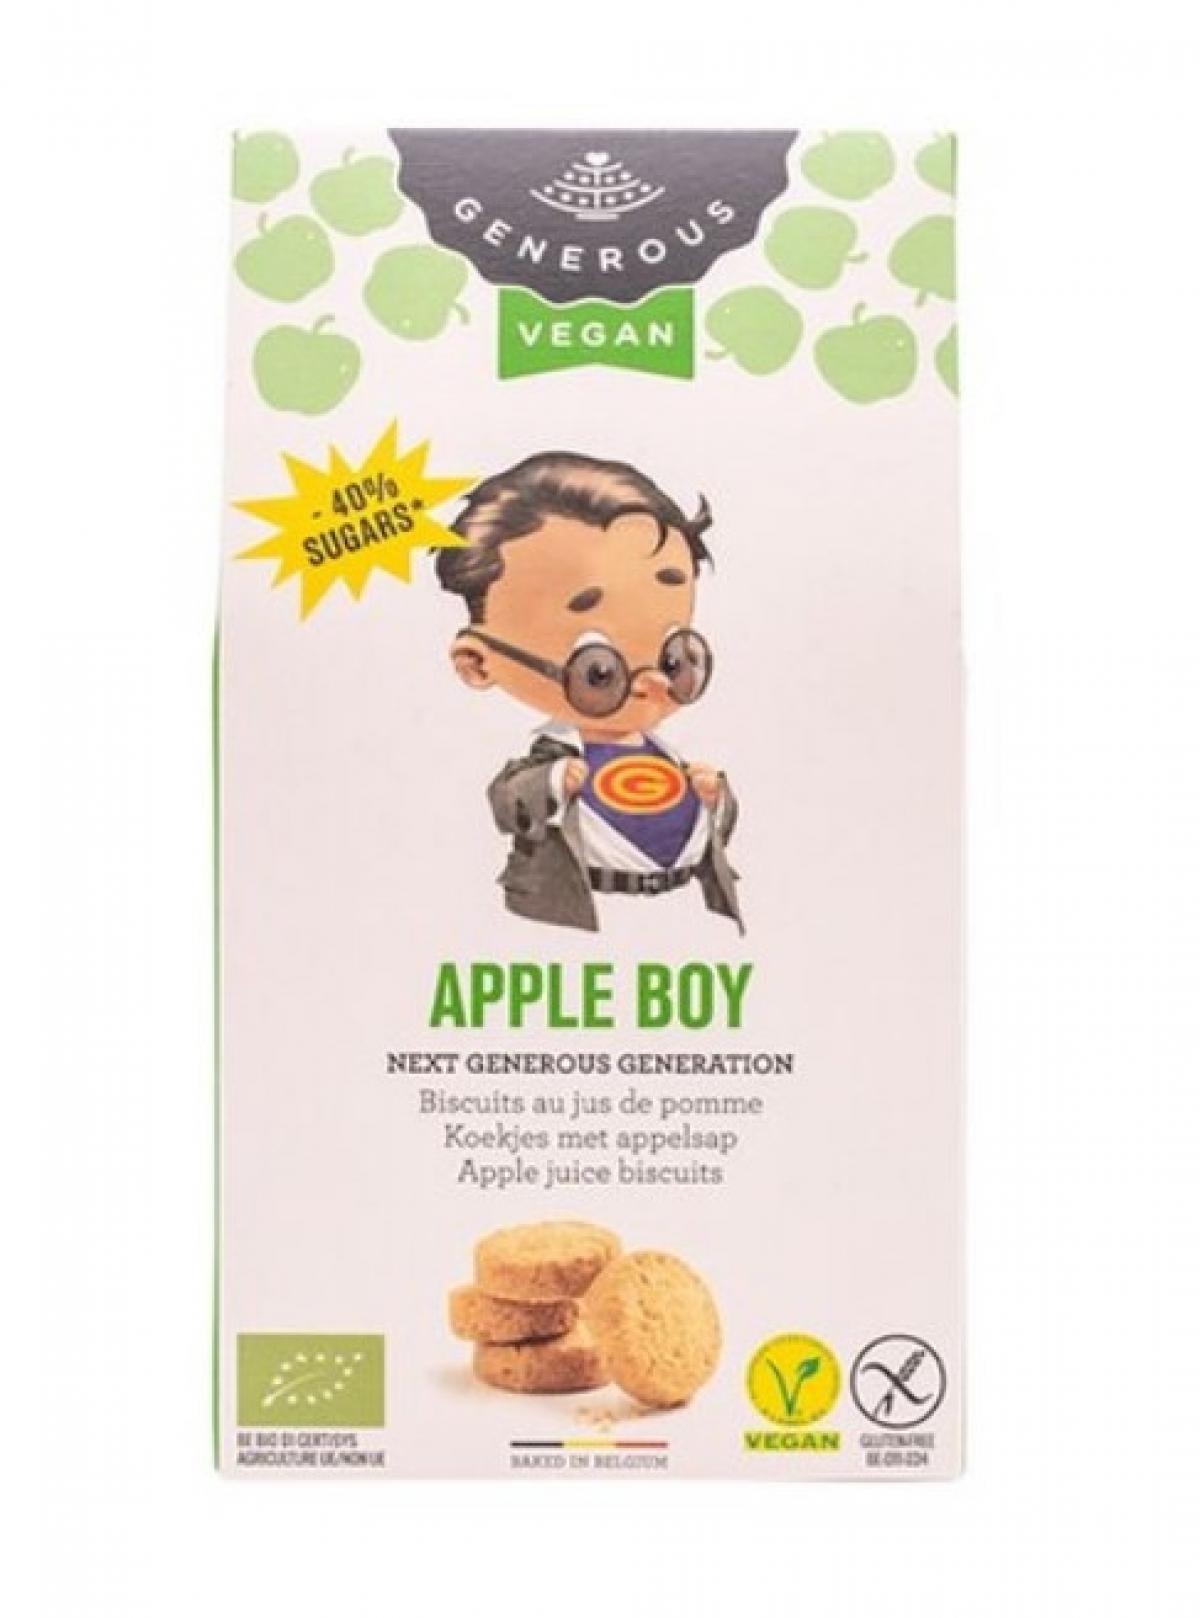 Generous Apple Boy Vegan